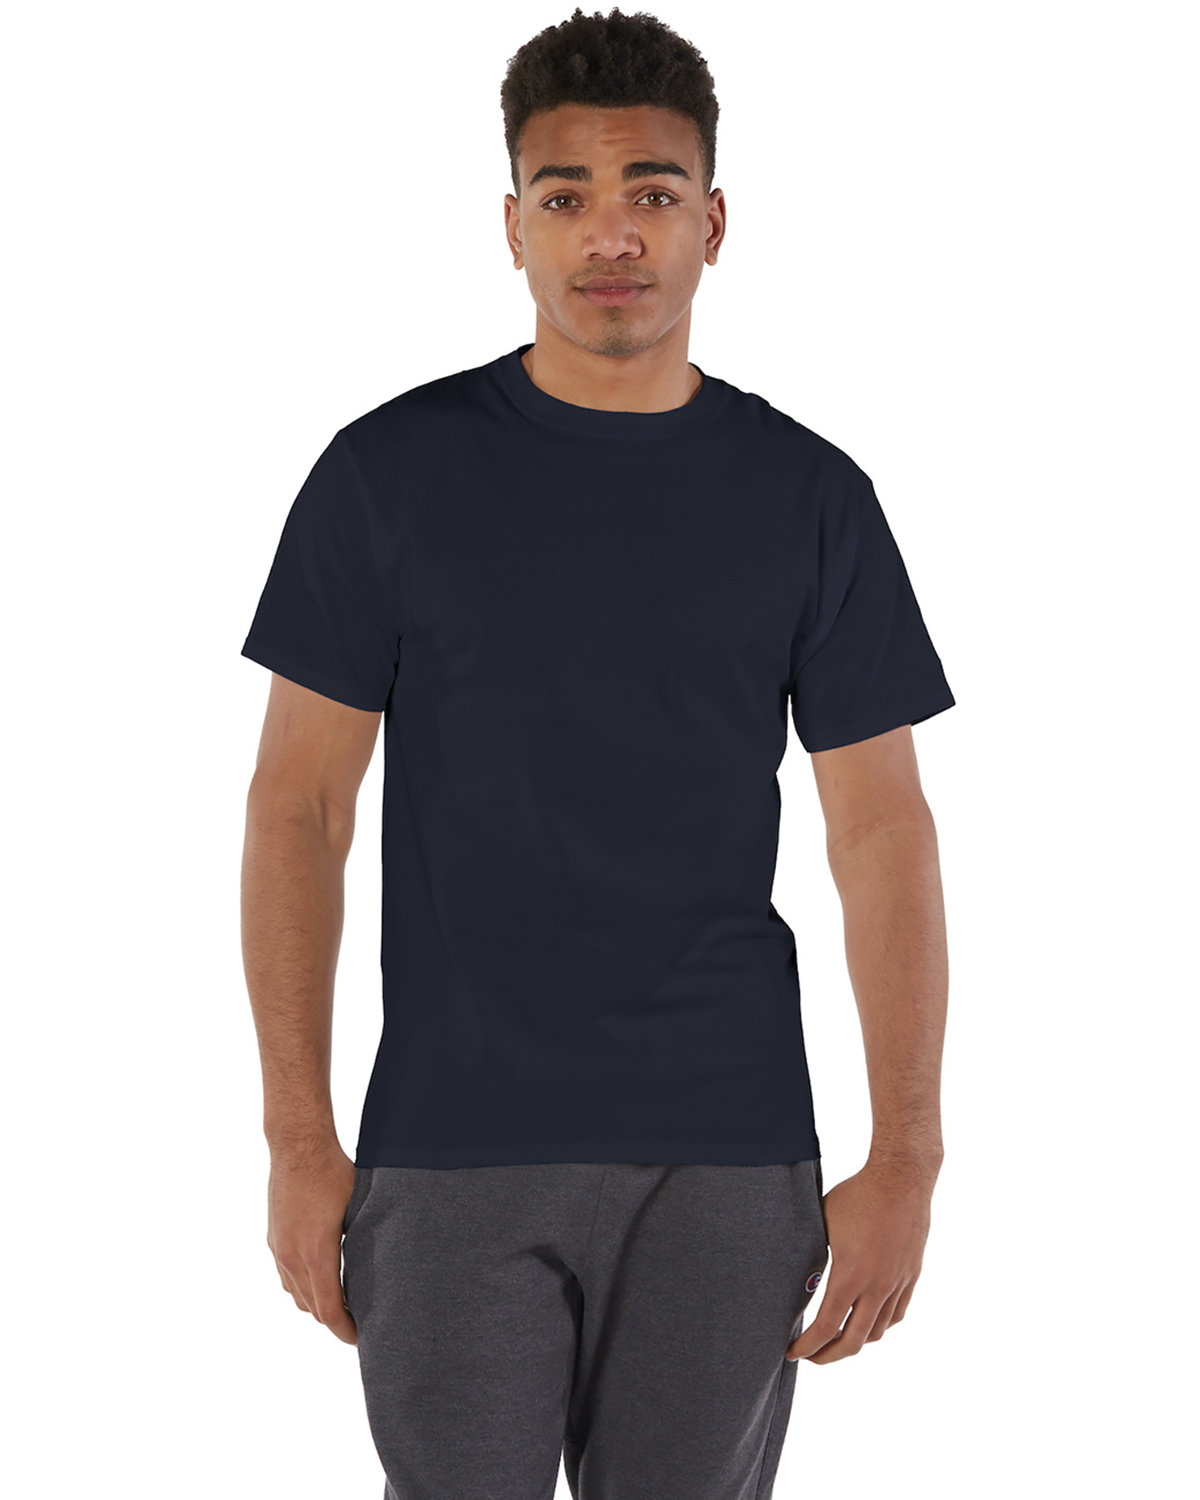 Champion Adult 6 oz. Short-Sleeve T-Shirt NAVY 